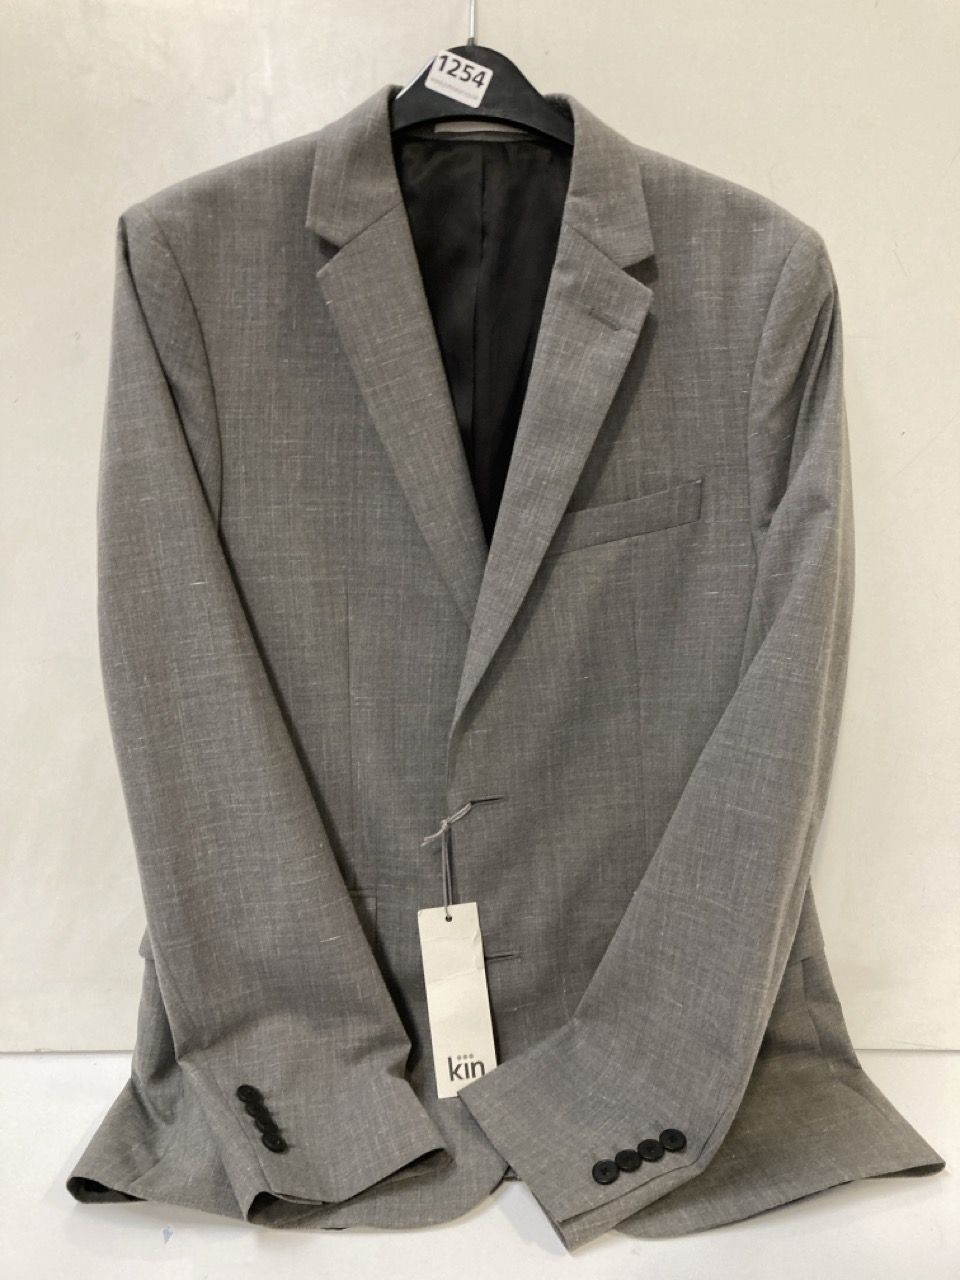 ASSORTMENT OF MEN'S CLOTHING TO INCLUDE JOHN LEWIS MELANGE SLIM GREY SUIT JACKET SIZE 38R